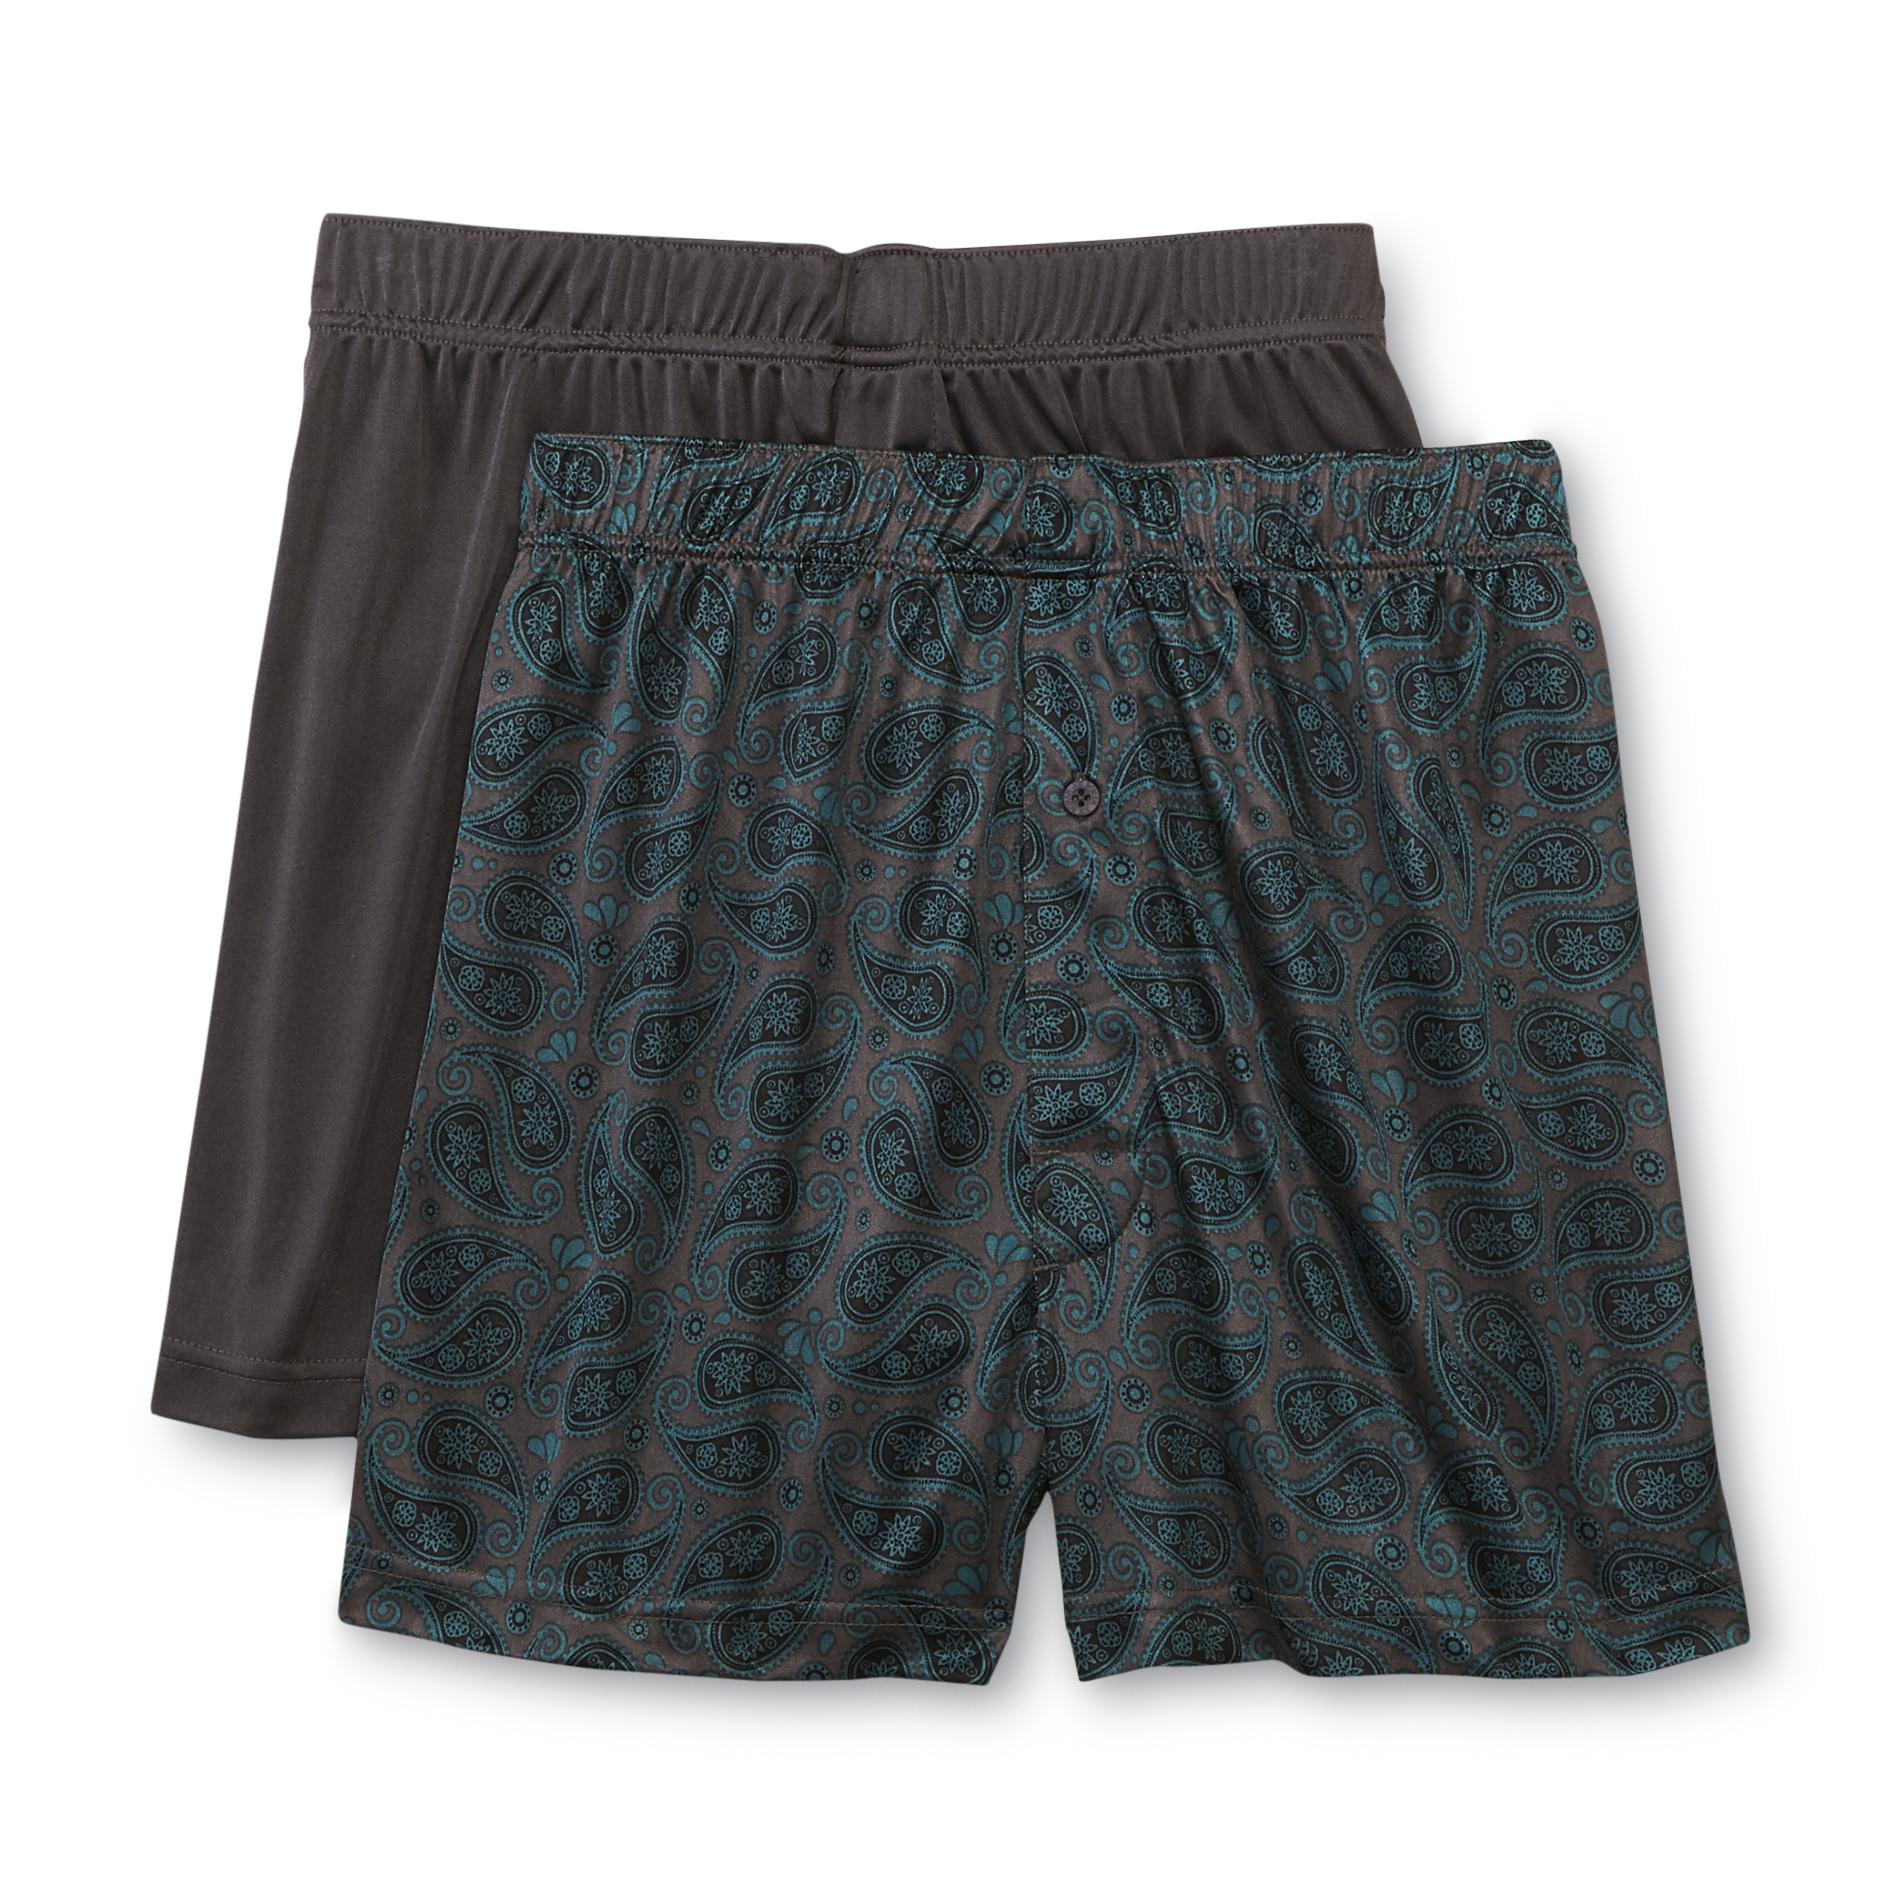 Joe Boxer Men's 2-Pack Tricot Knit Boxer Shorts